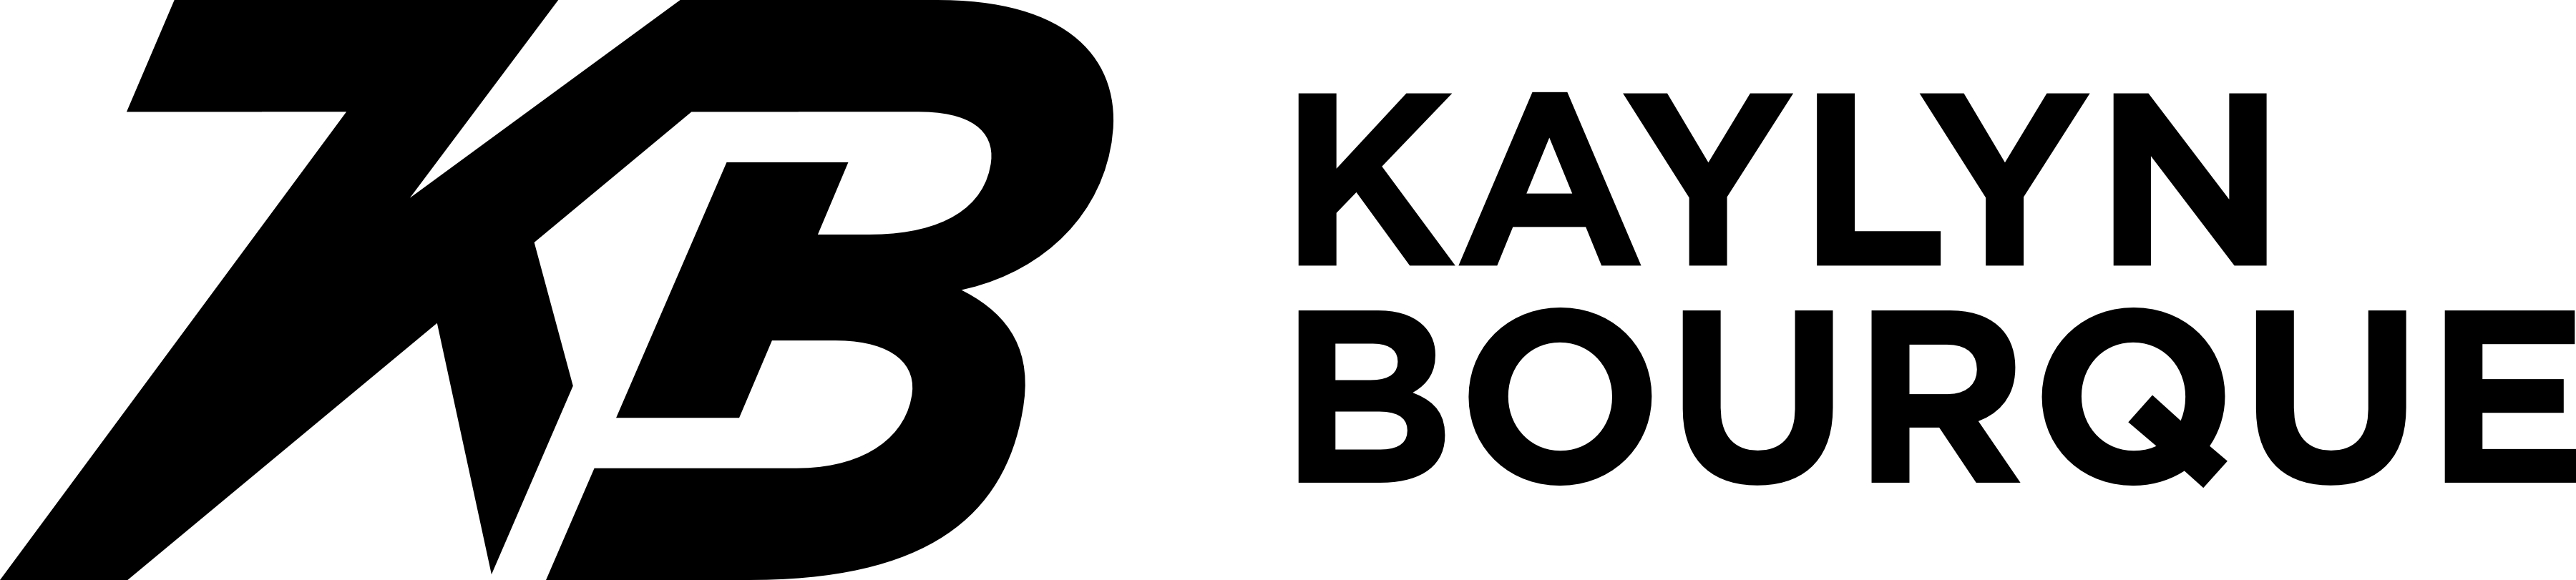 Athlete logo for Kaylyn Bourque